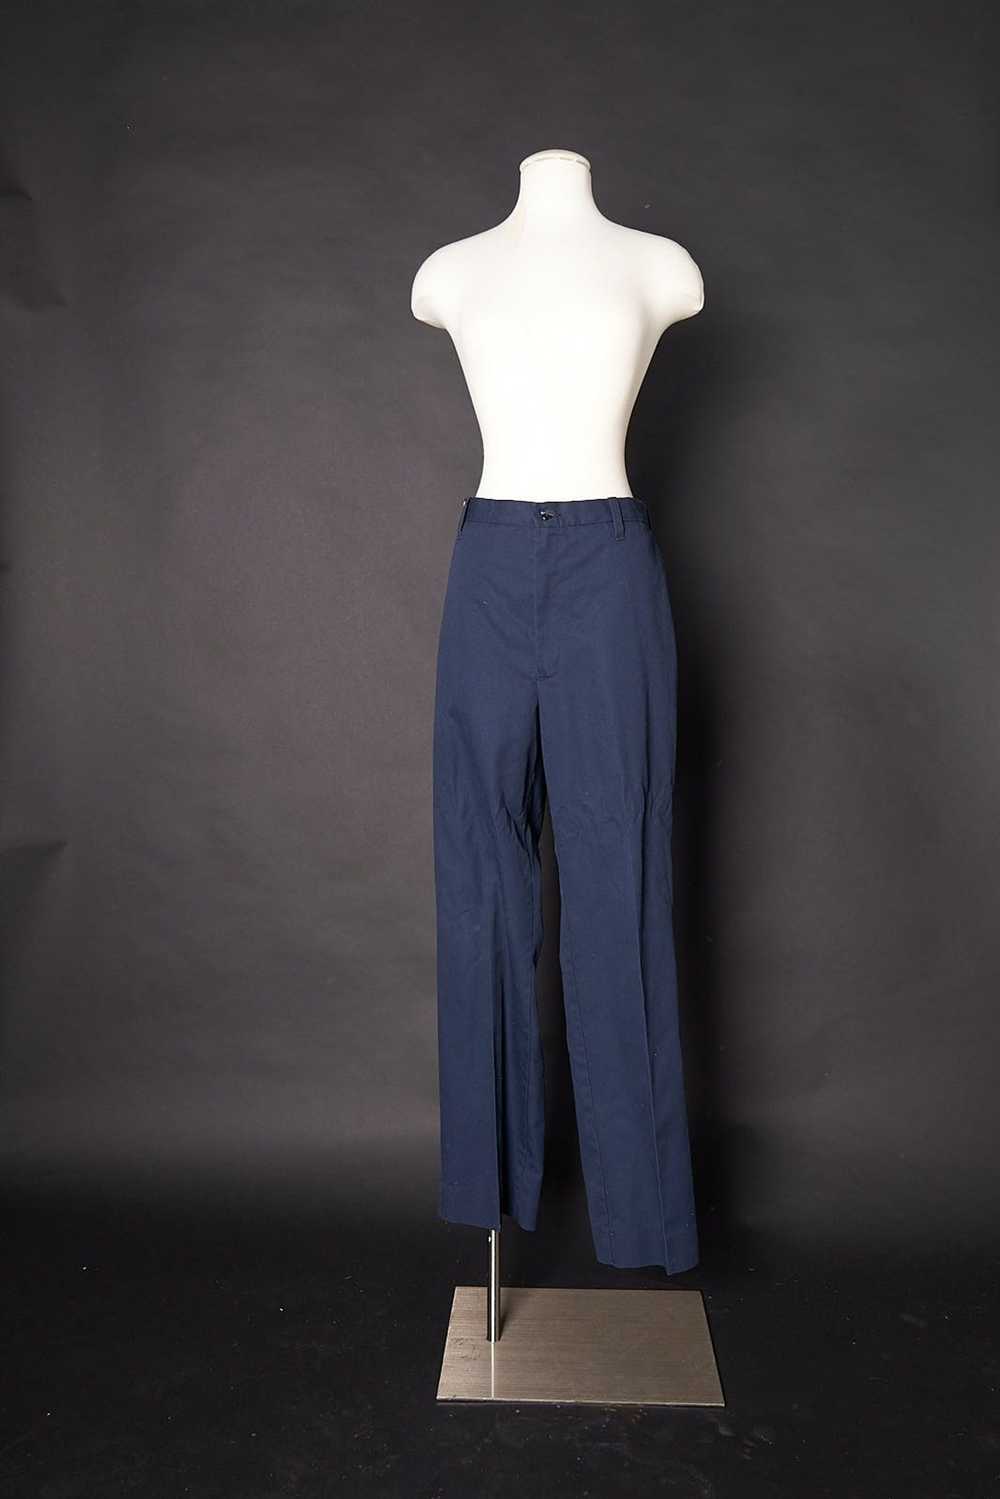 Dickies 874 Pants Mens Original Fit Classic Work Uniform Bottoms All Colors